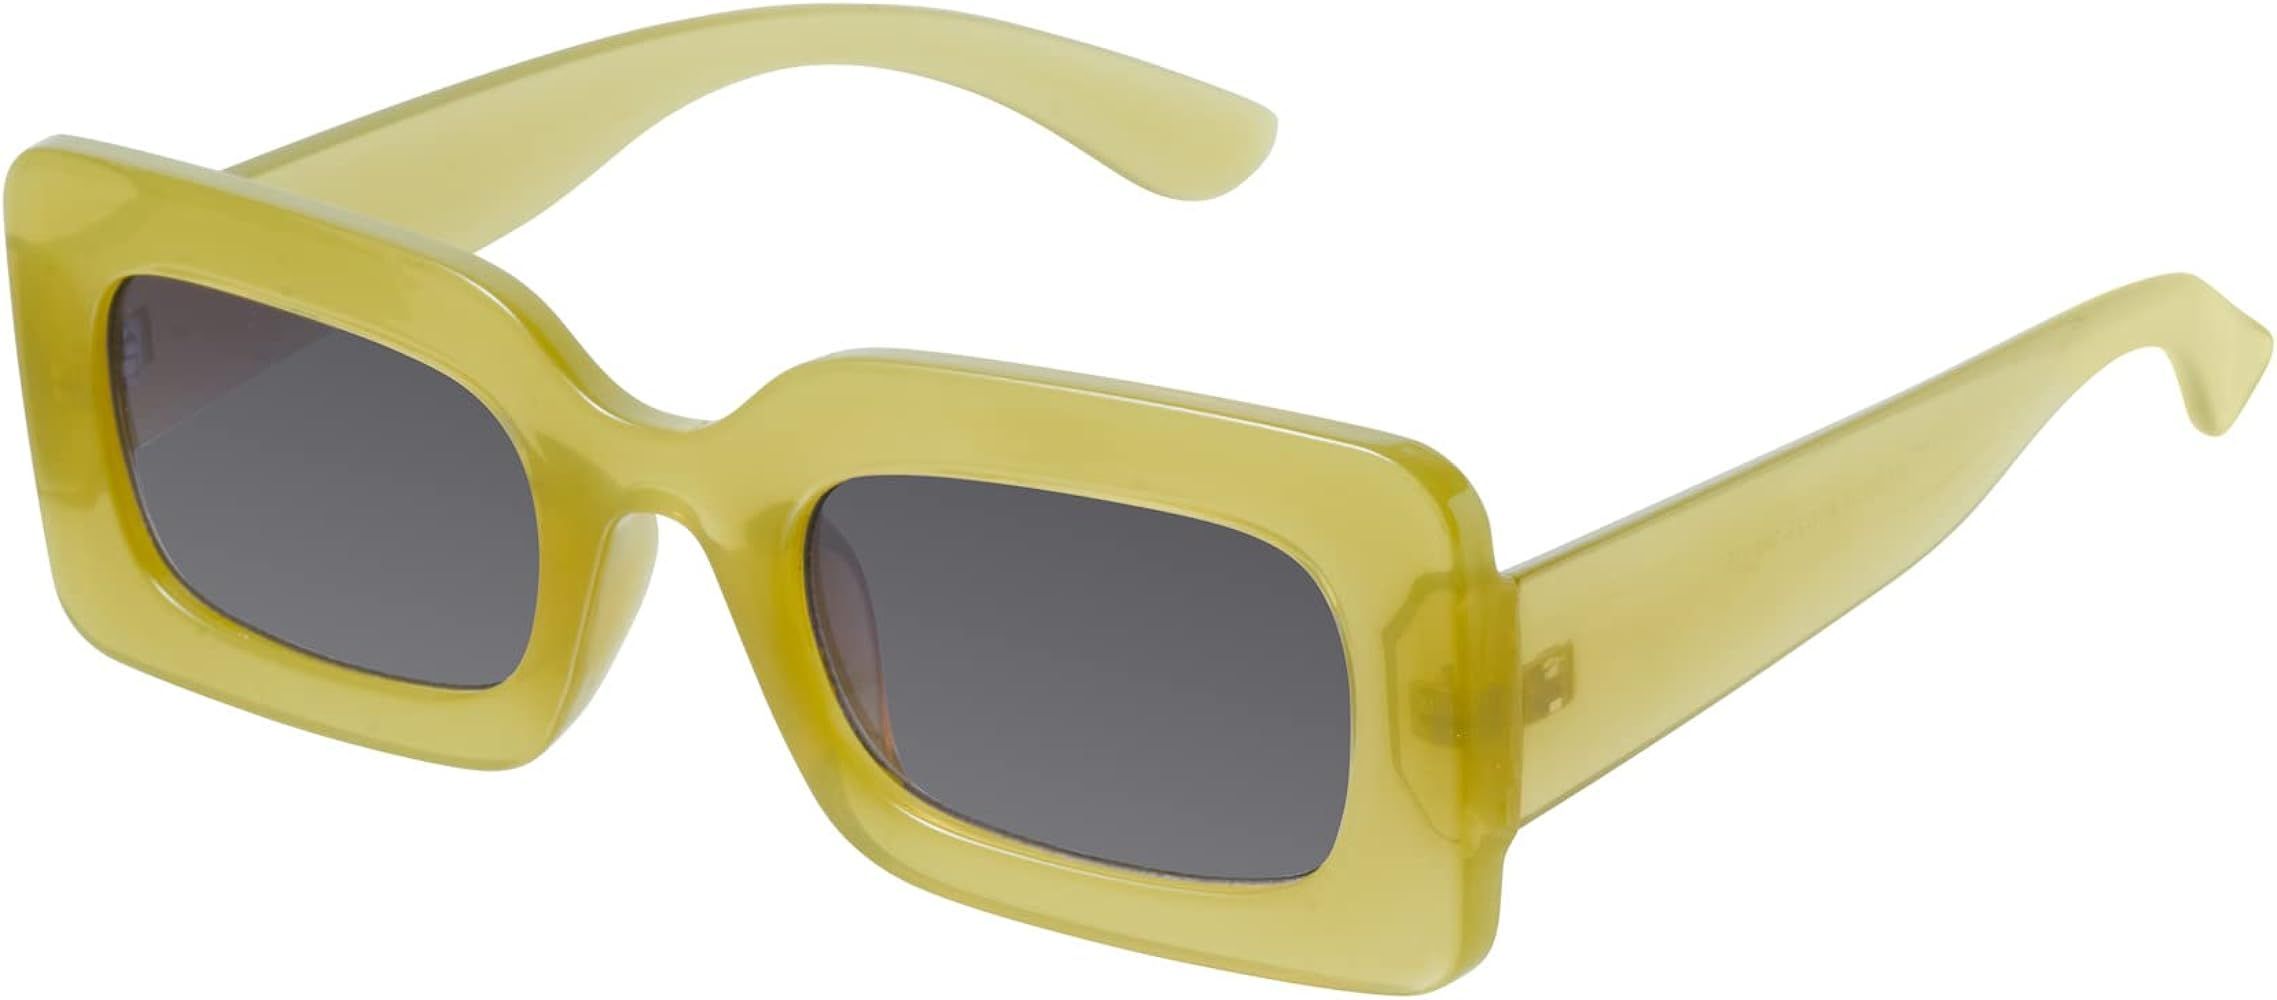 mosanana Trendy Rectangle Sunglasses for Women Men Model-Trimble | Amazon (US)